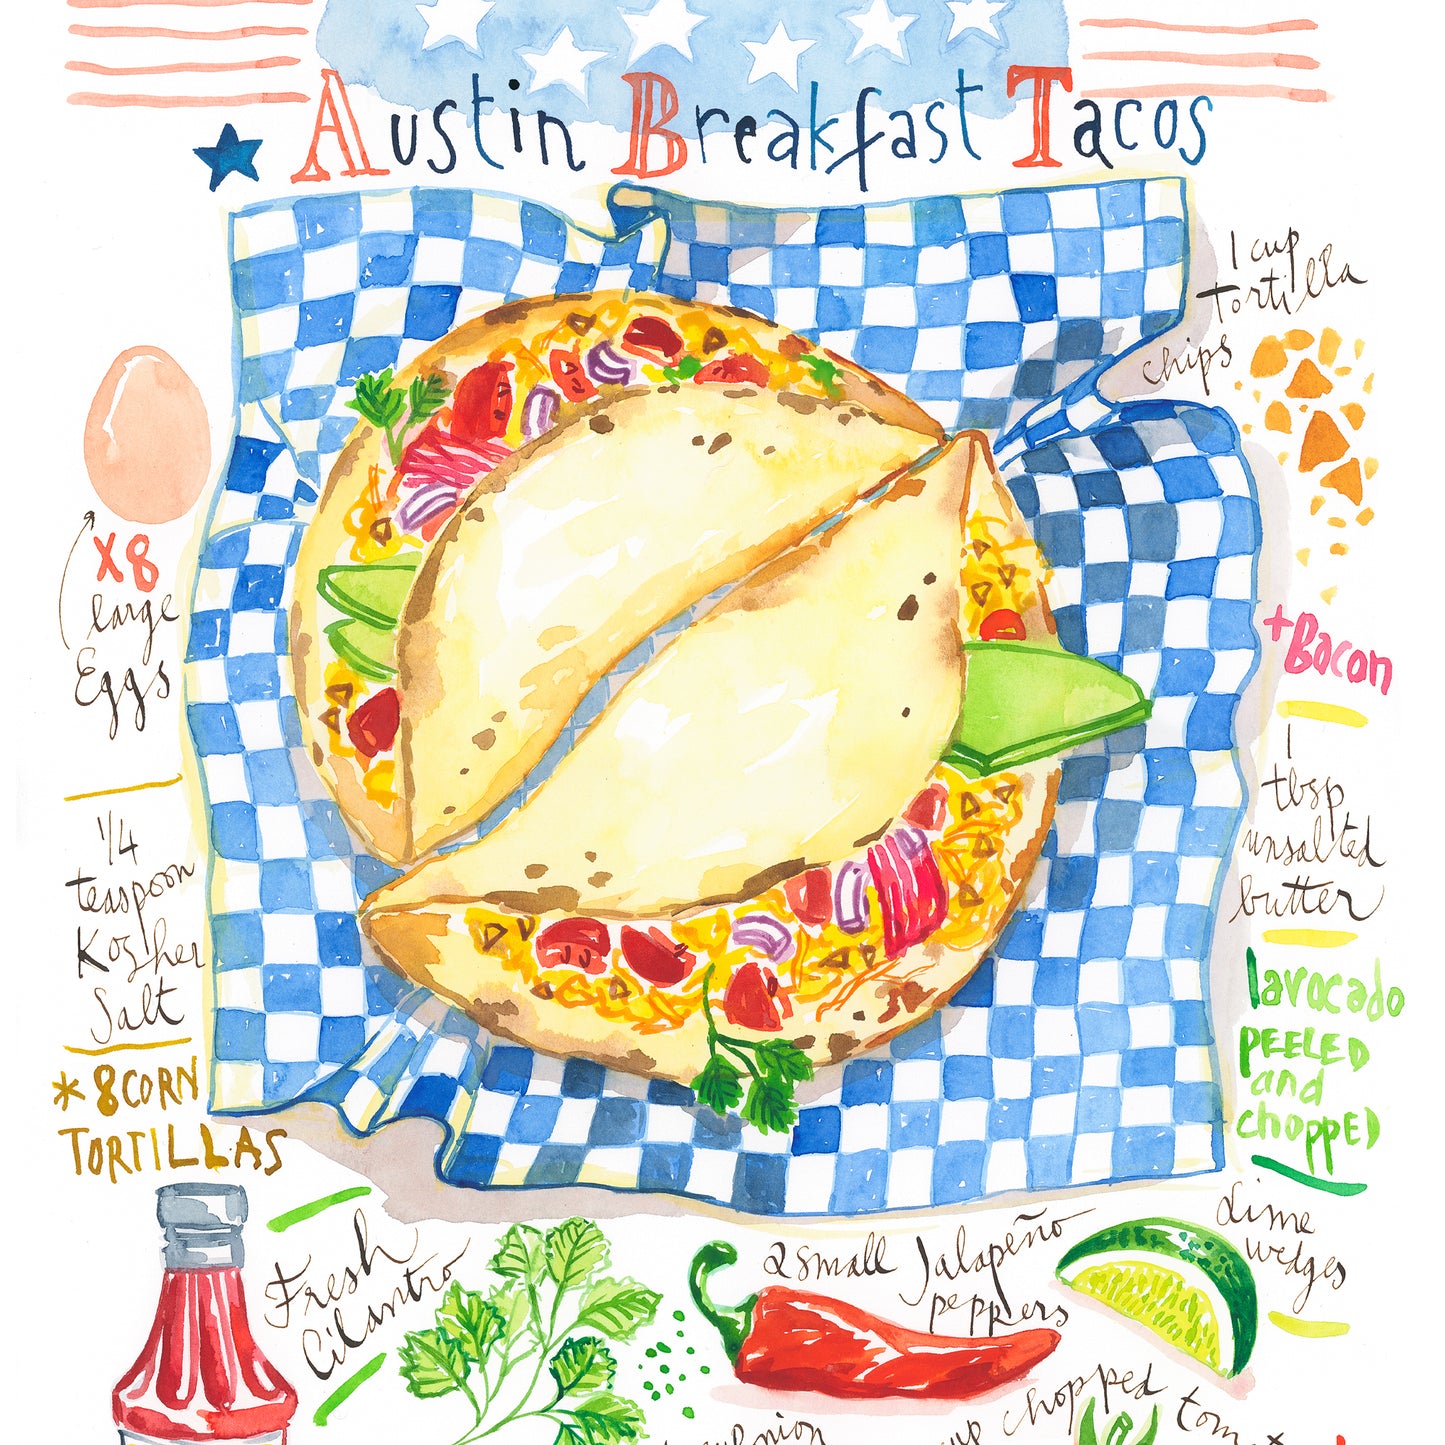 Austin Breakfast Taco recipe